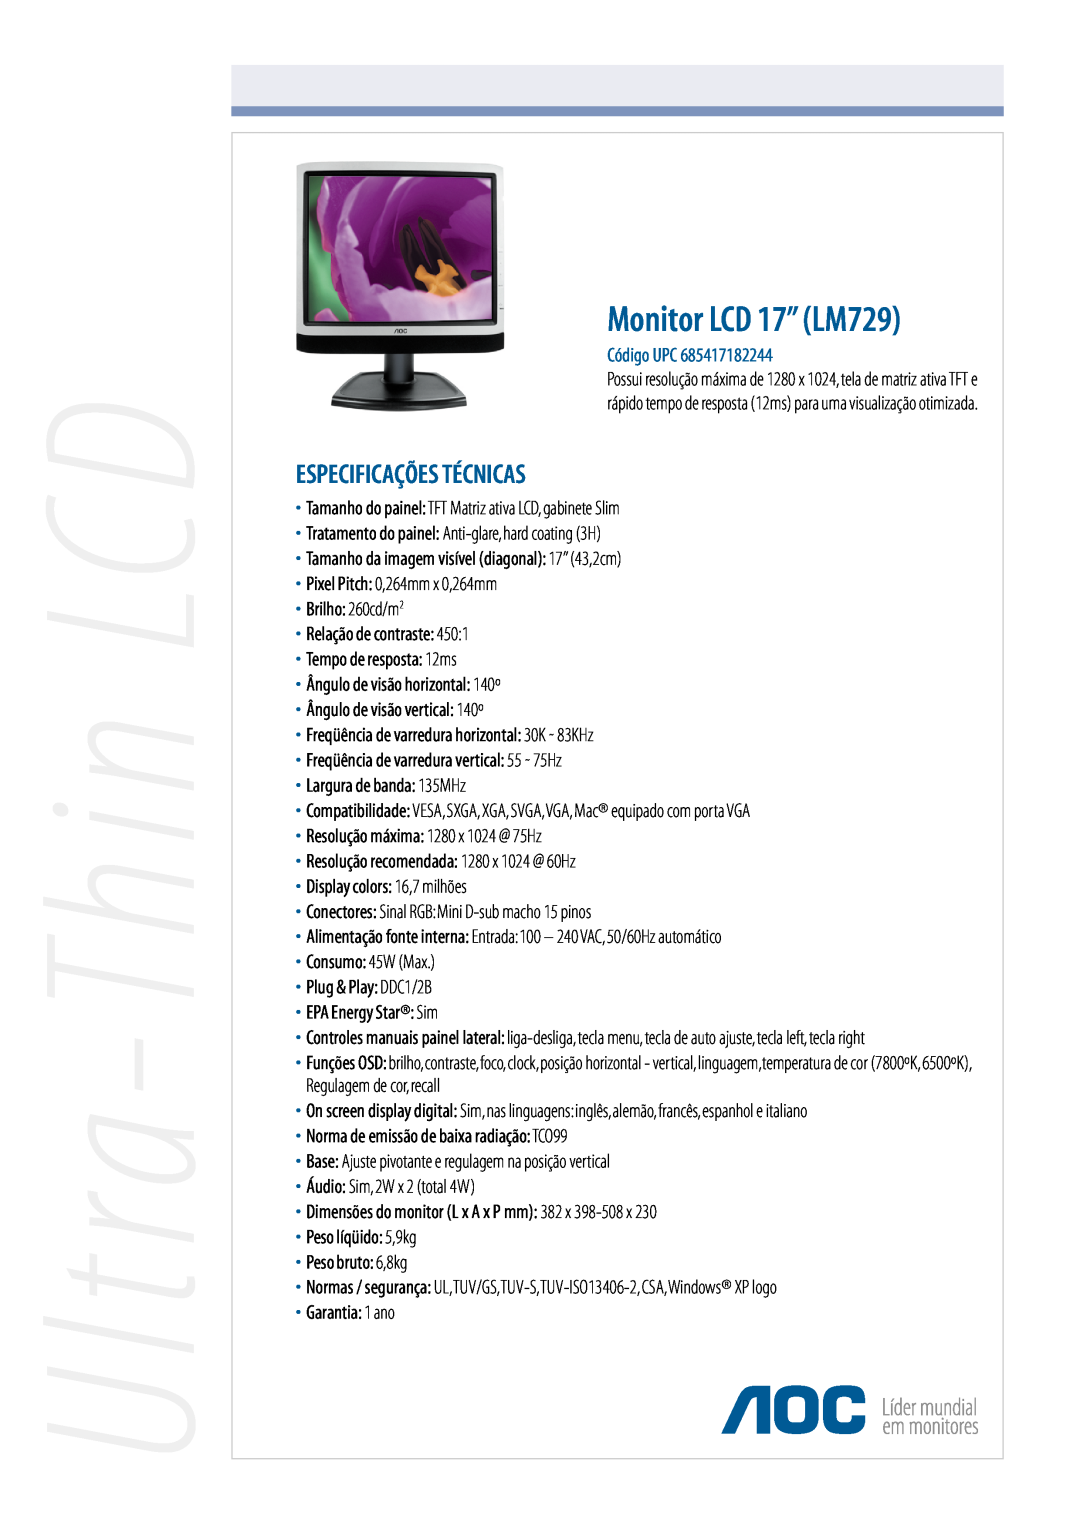 AOC 17" LM729 manual Ultra - Thin LCD, Monitor LCD 17” LM729, Especificações Técnicas, Código UPC 